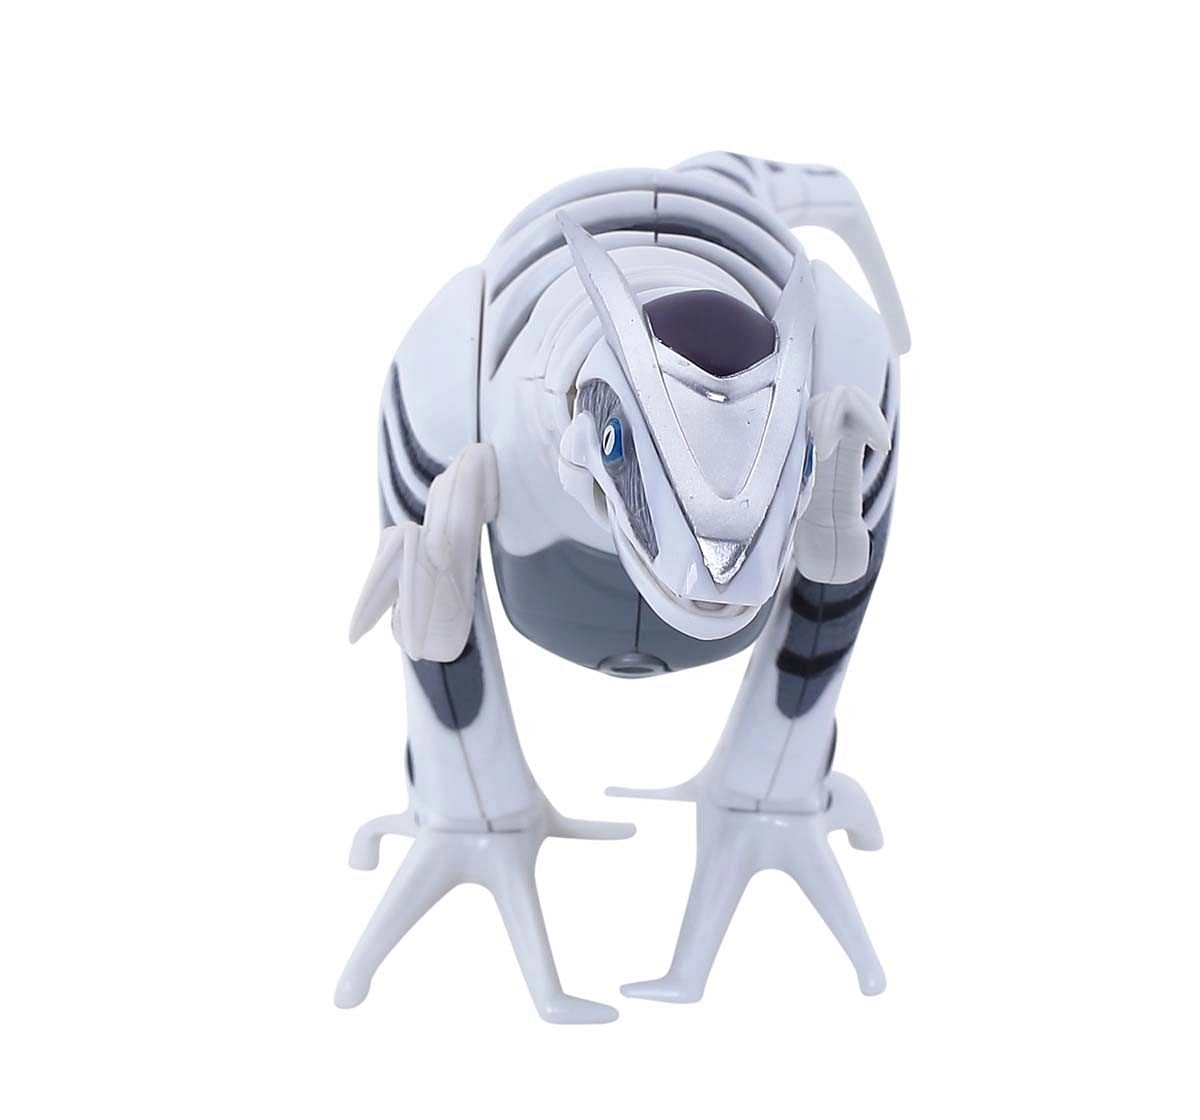 Wowwee White Mini Roboraptor Electric Toy Robotics for Kids age 4Y+ 